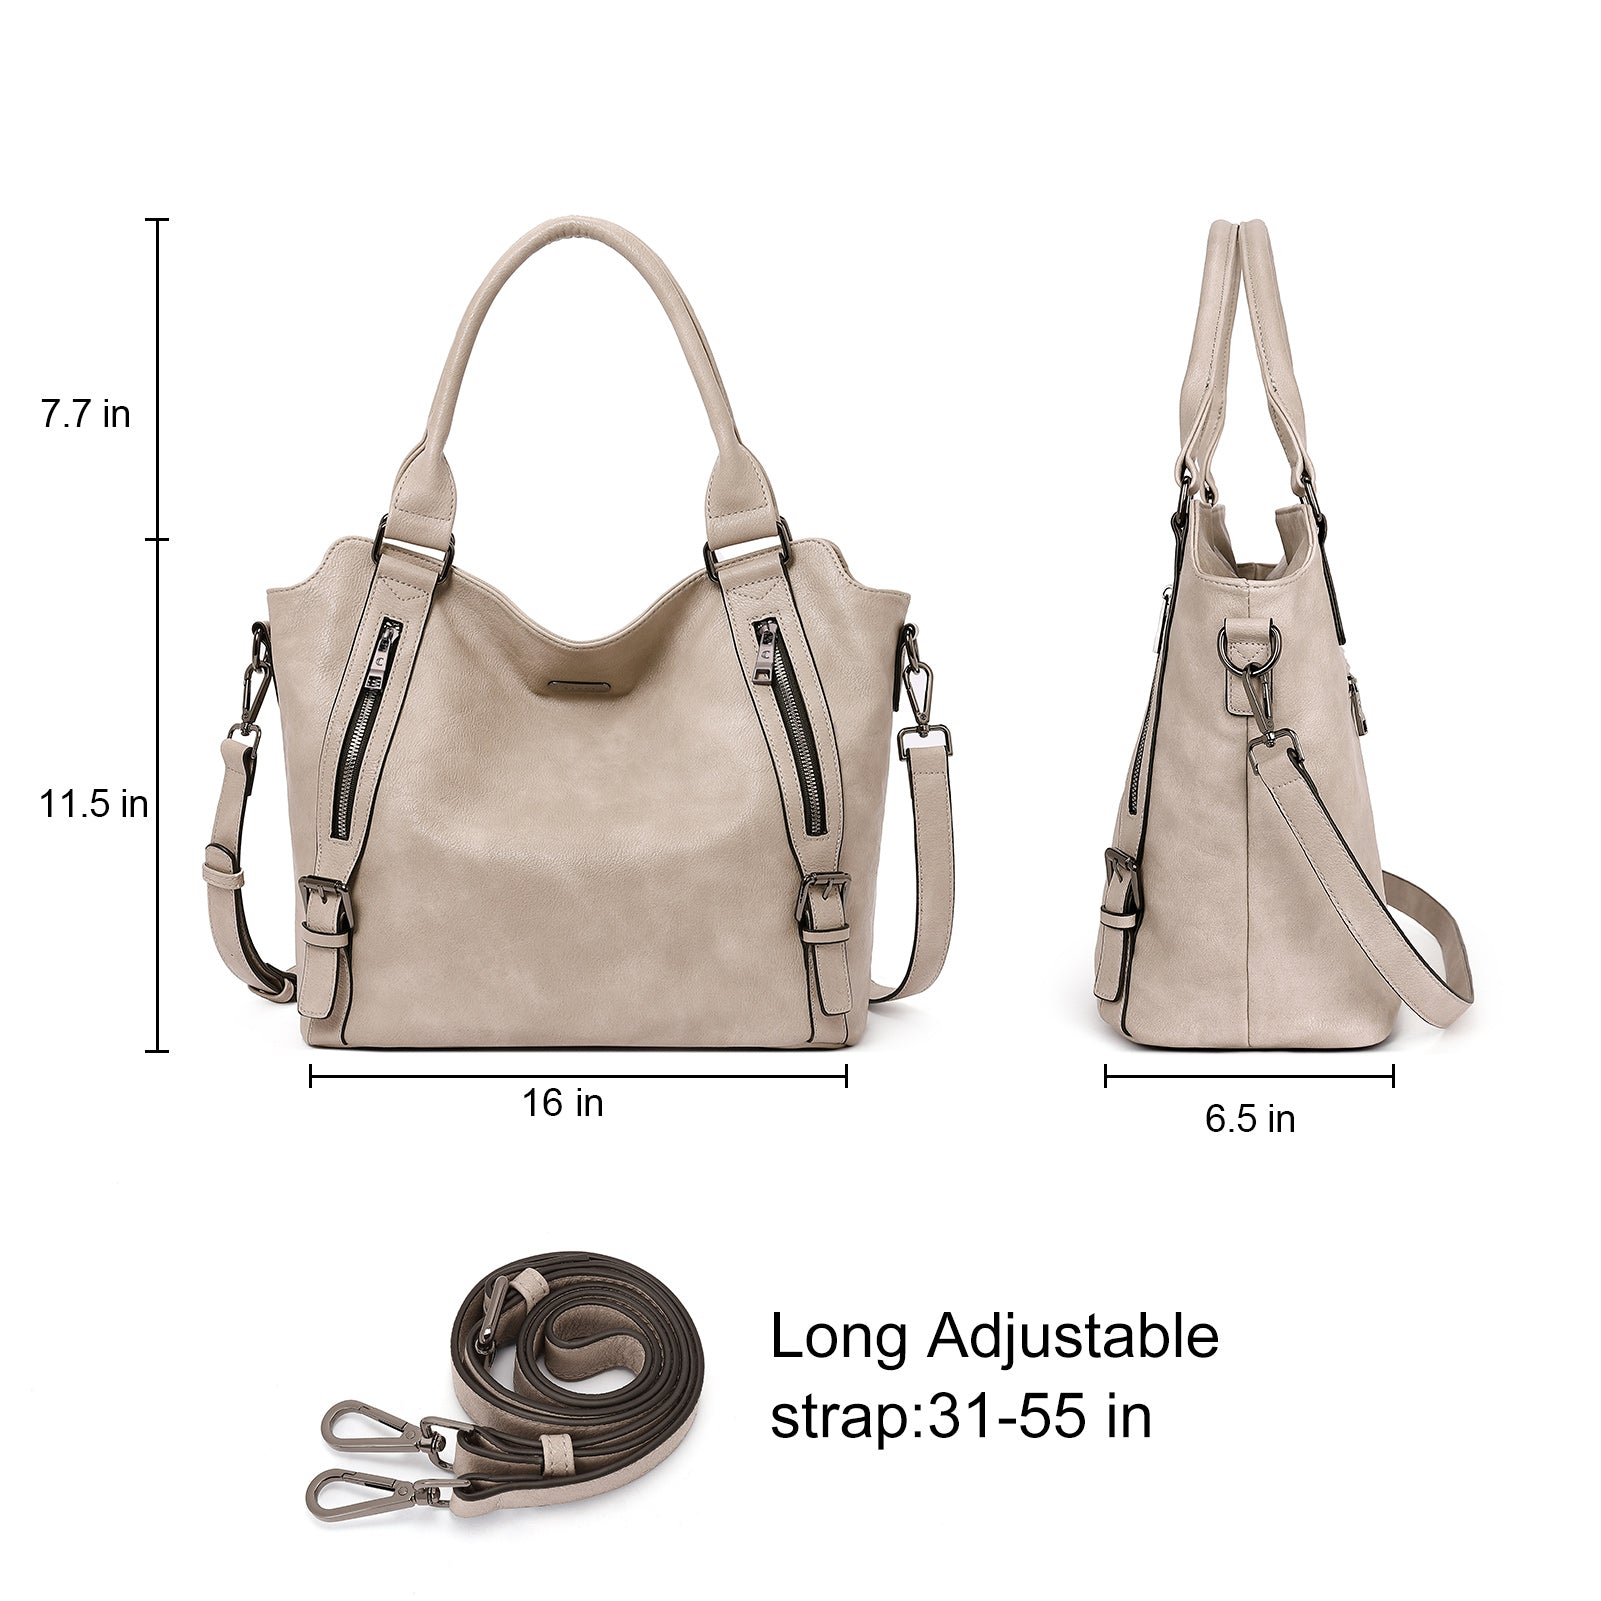 CLUCI Hobo Bags for Women Vegan Leather Handbags Large Ladies Purse Tote Shoulder Bag